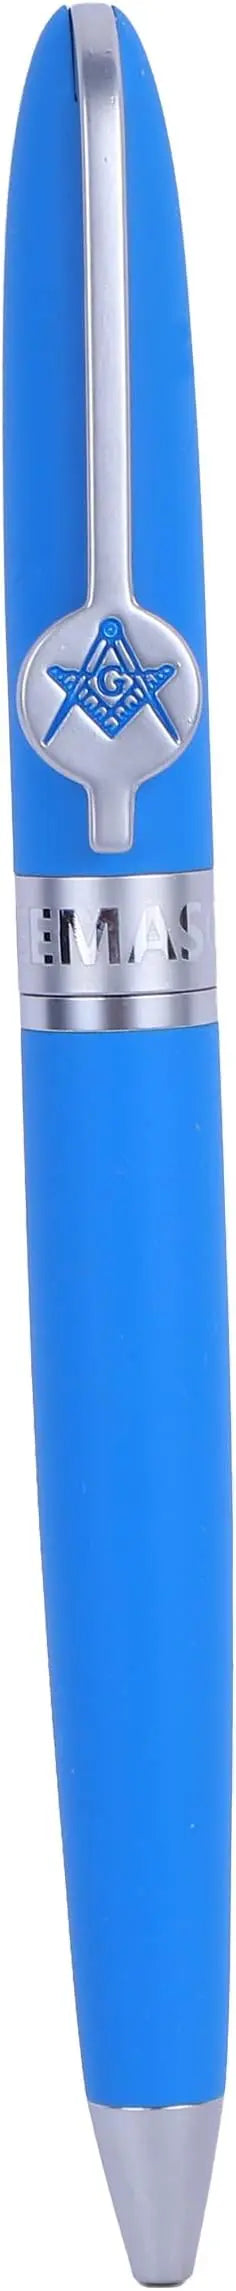 Masonic Official Ballpoint Pen in Blue Trendy Zone 21